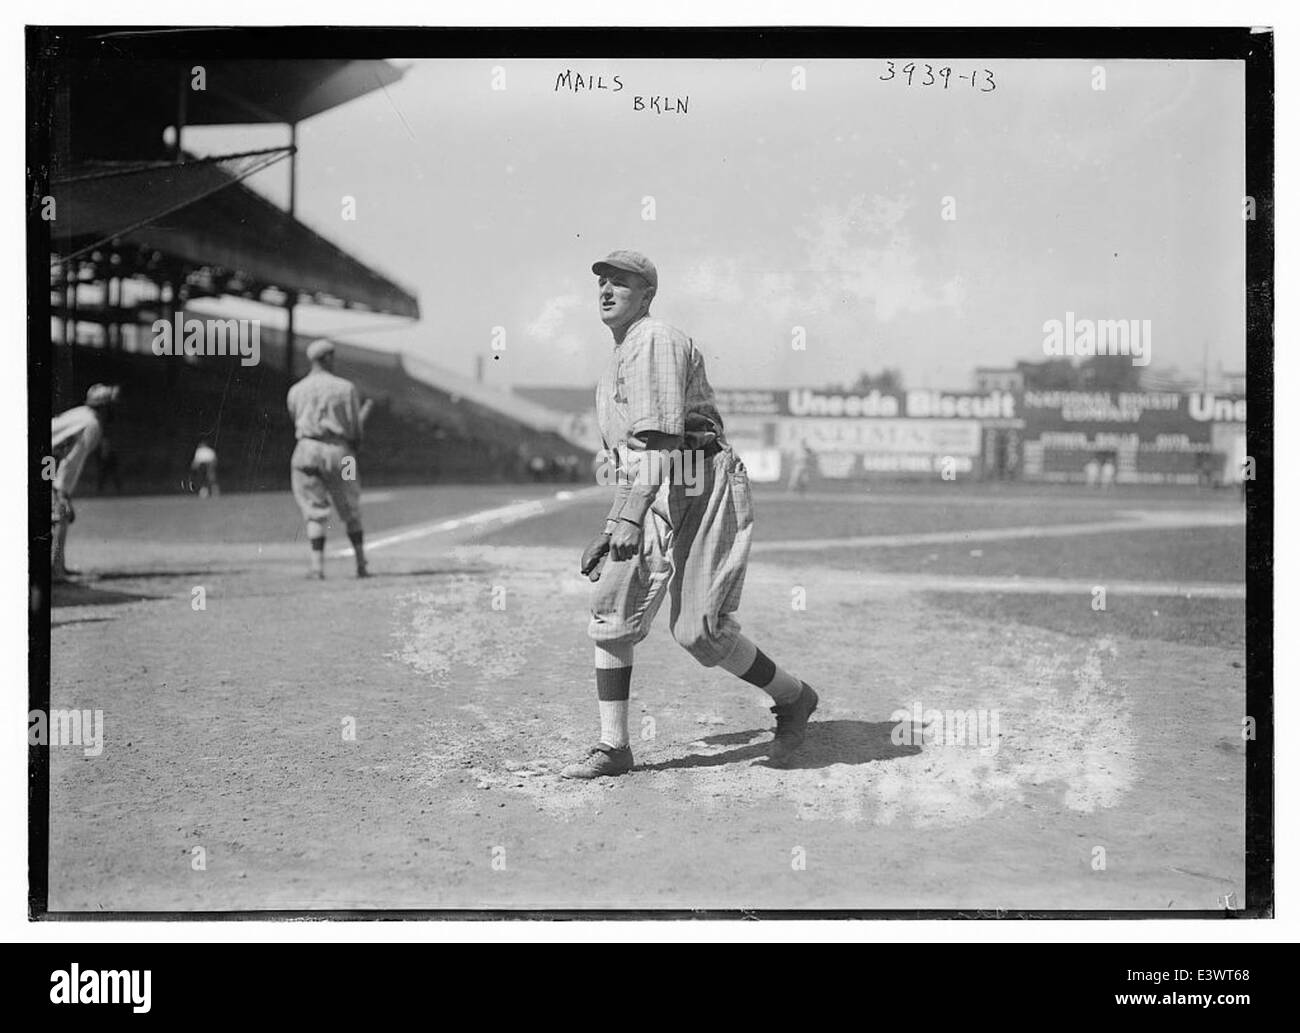 [John W. 'Duster' Mails, Brooklyn NL (baseball)] (LOC) Stock Photo